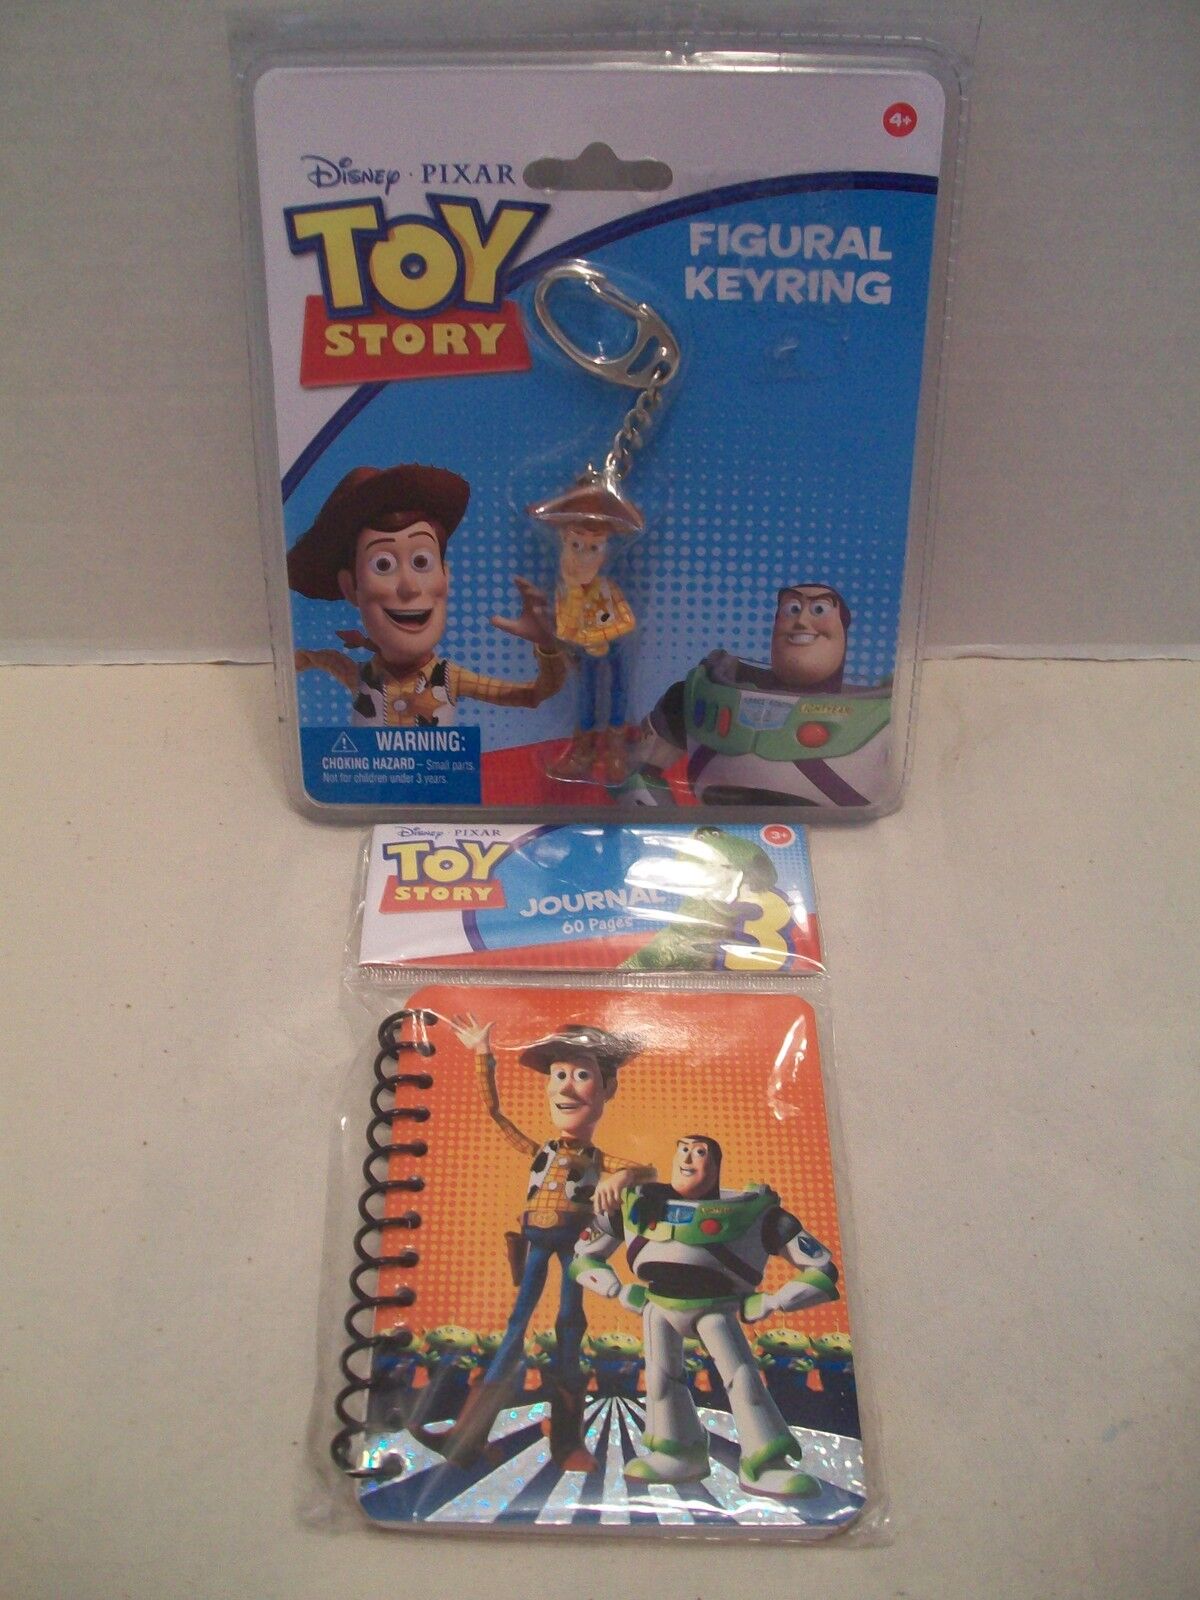 Toy Story Disney Pixar #29515 Figural Keyring With Bonus Toy Story Journal NIB!